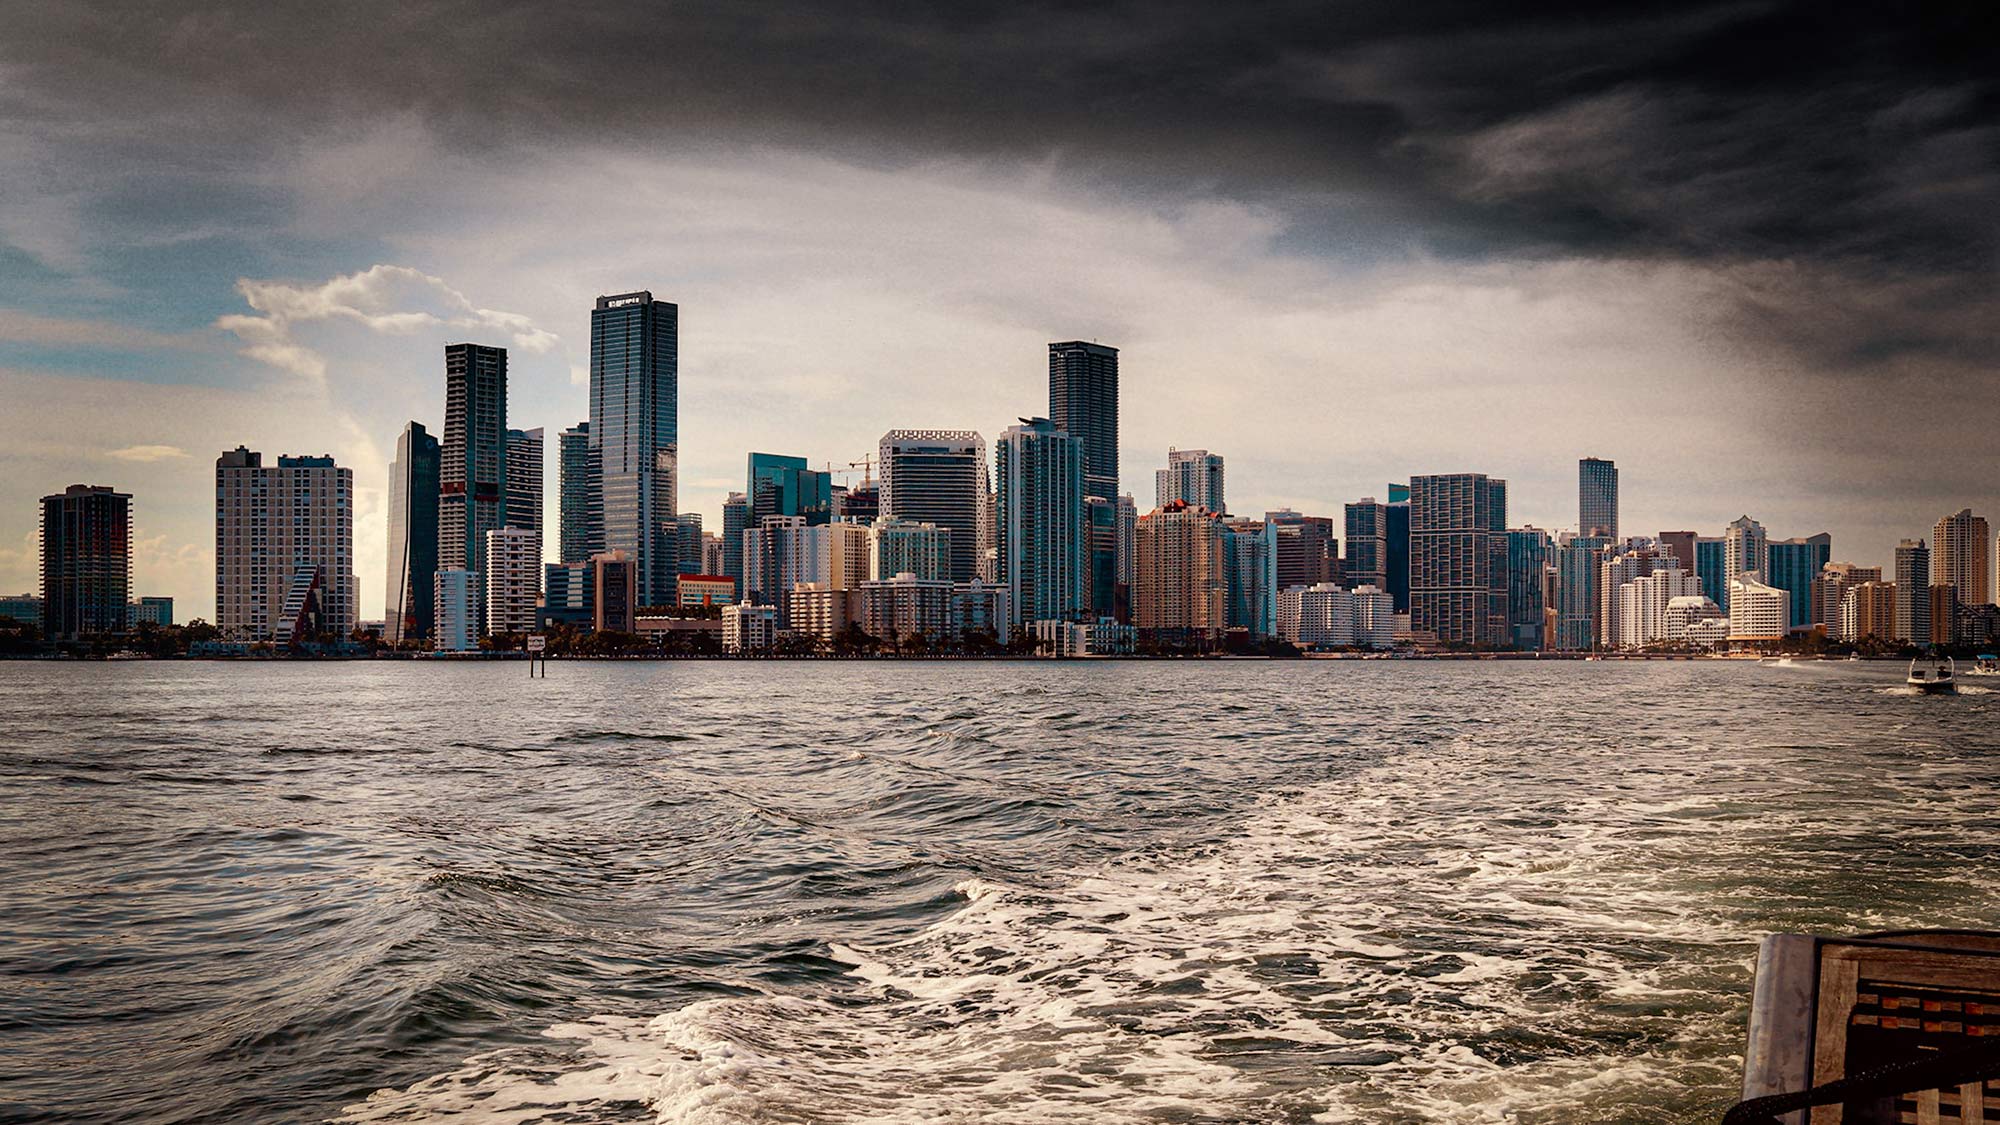 Miami, Florida, under a storm